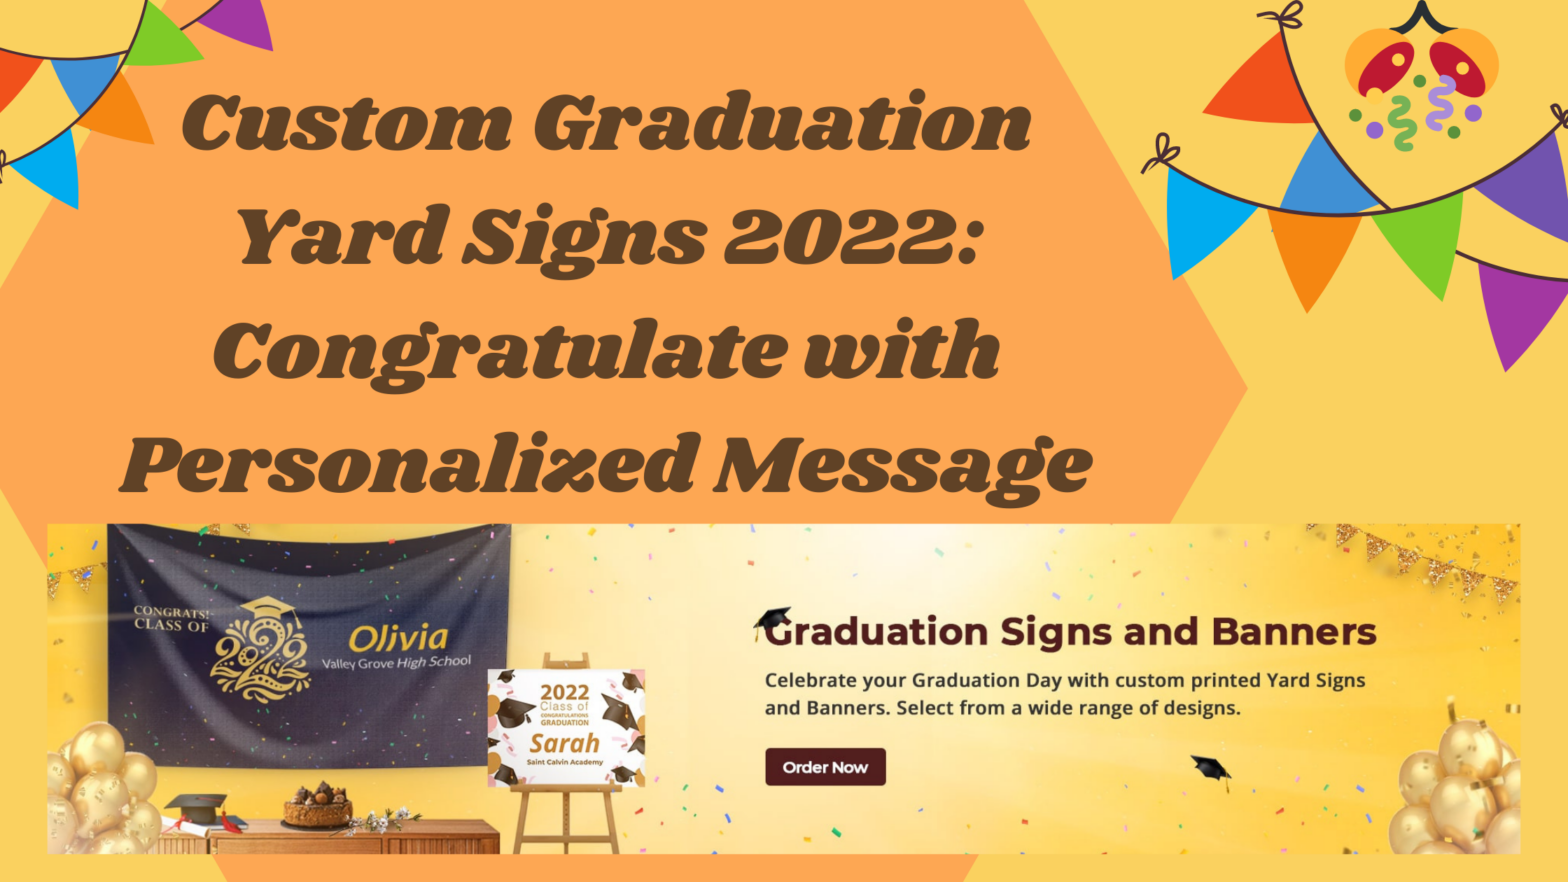 Custom Gradaution Yard Signs 2022